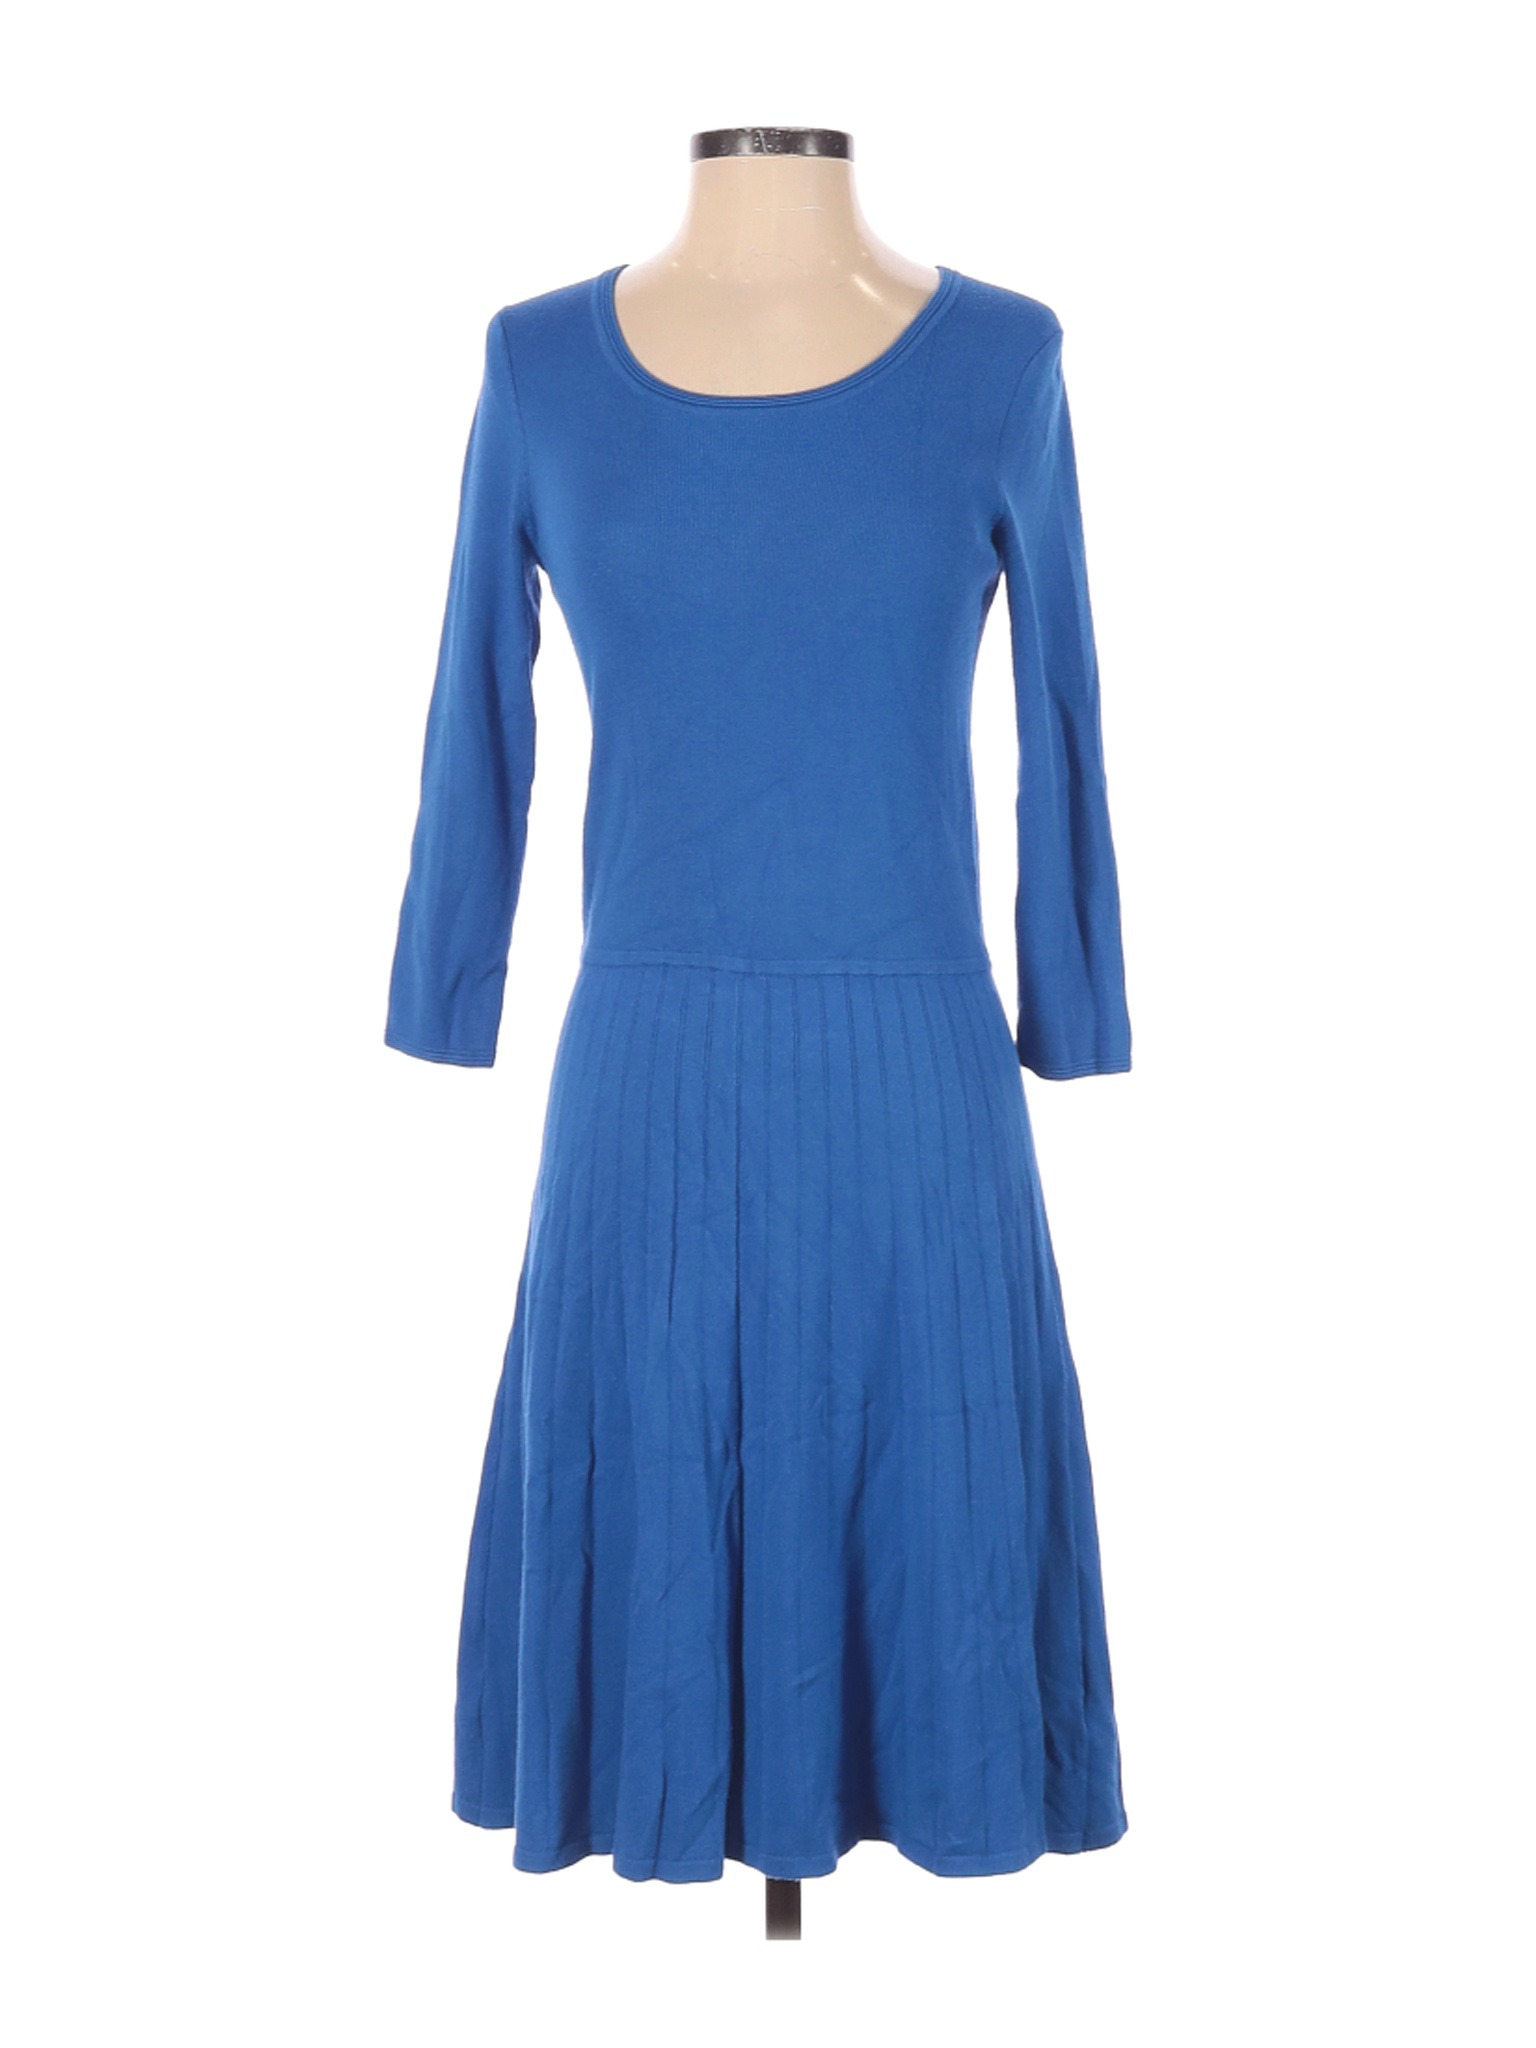 Talbots Women Blue Casual Dress S Petites | eBay